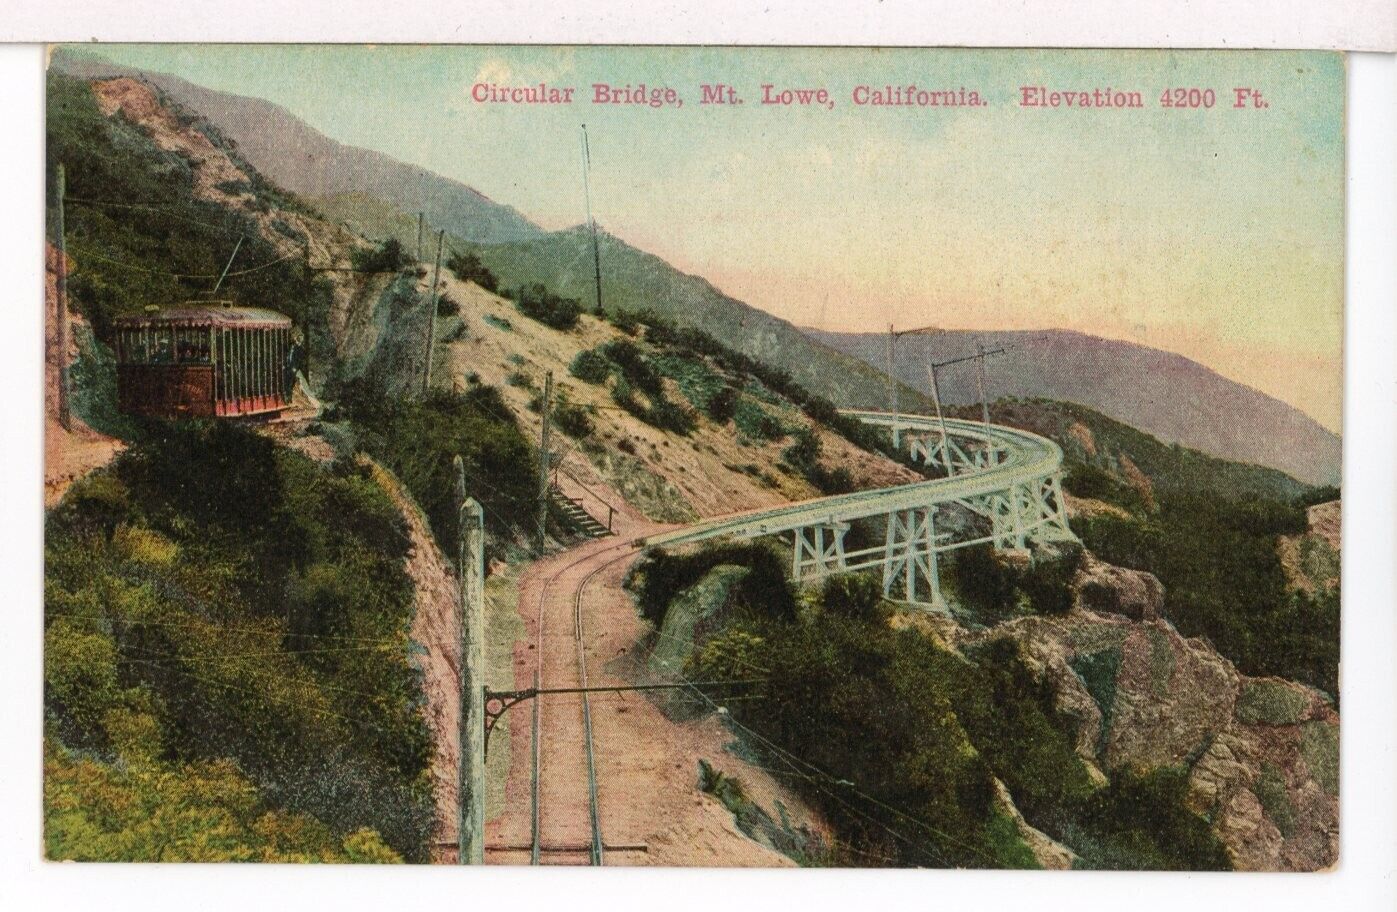 Open Trolley above CIRCULAR BRIDGE, Mt. Lowe, LA County, CA 1907 - 1915 Postcard